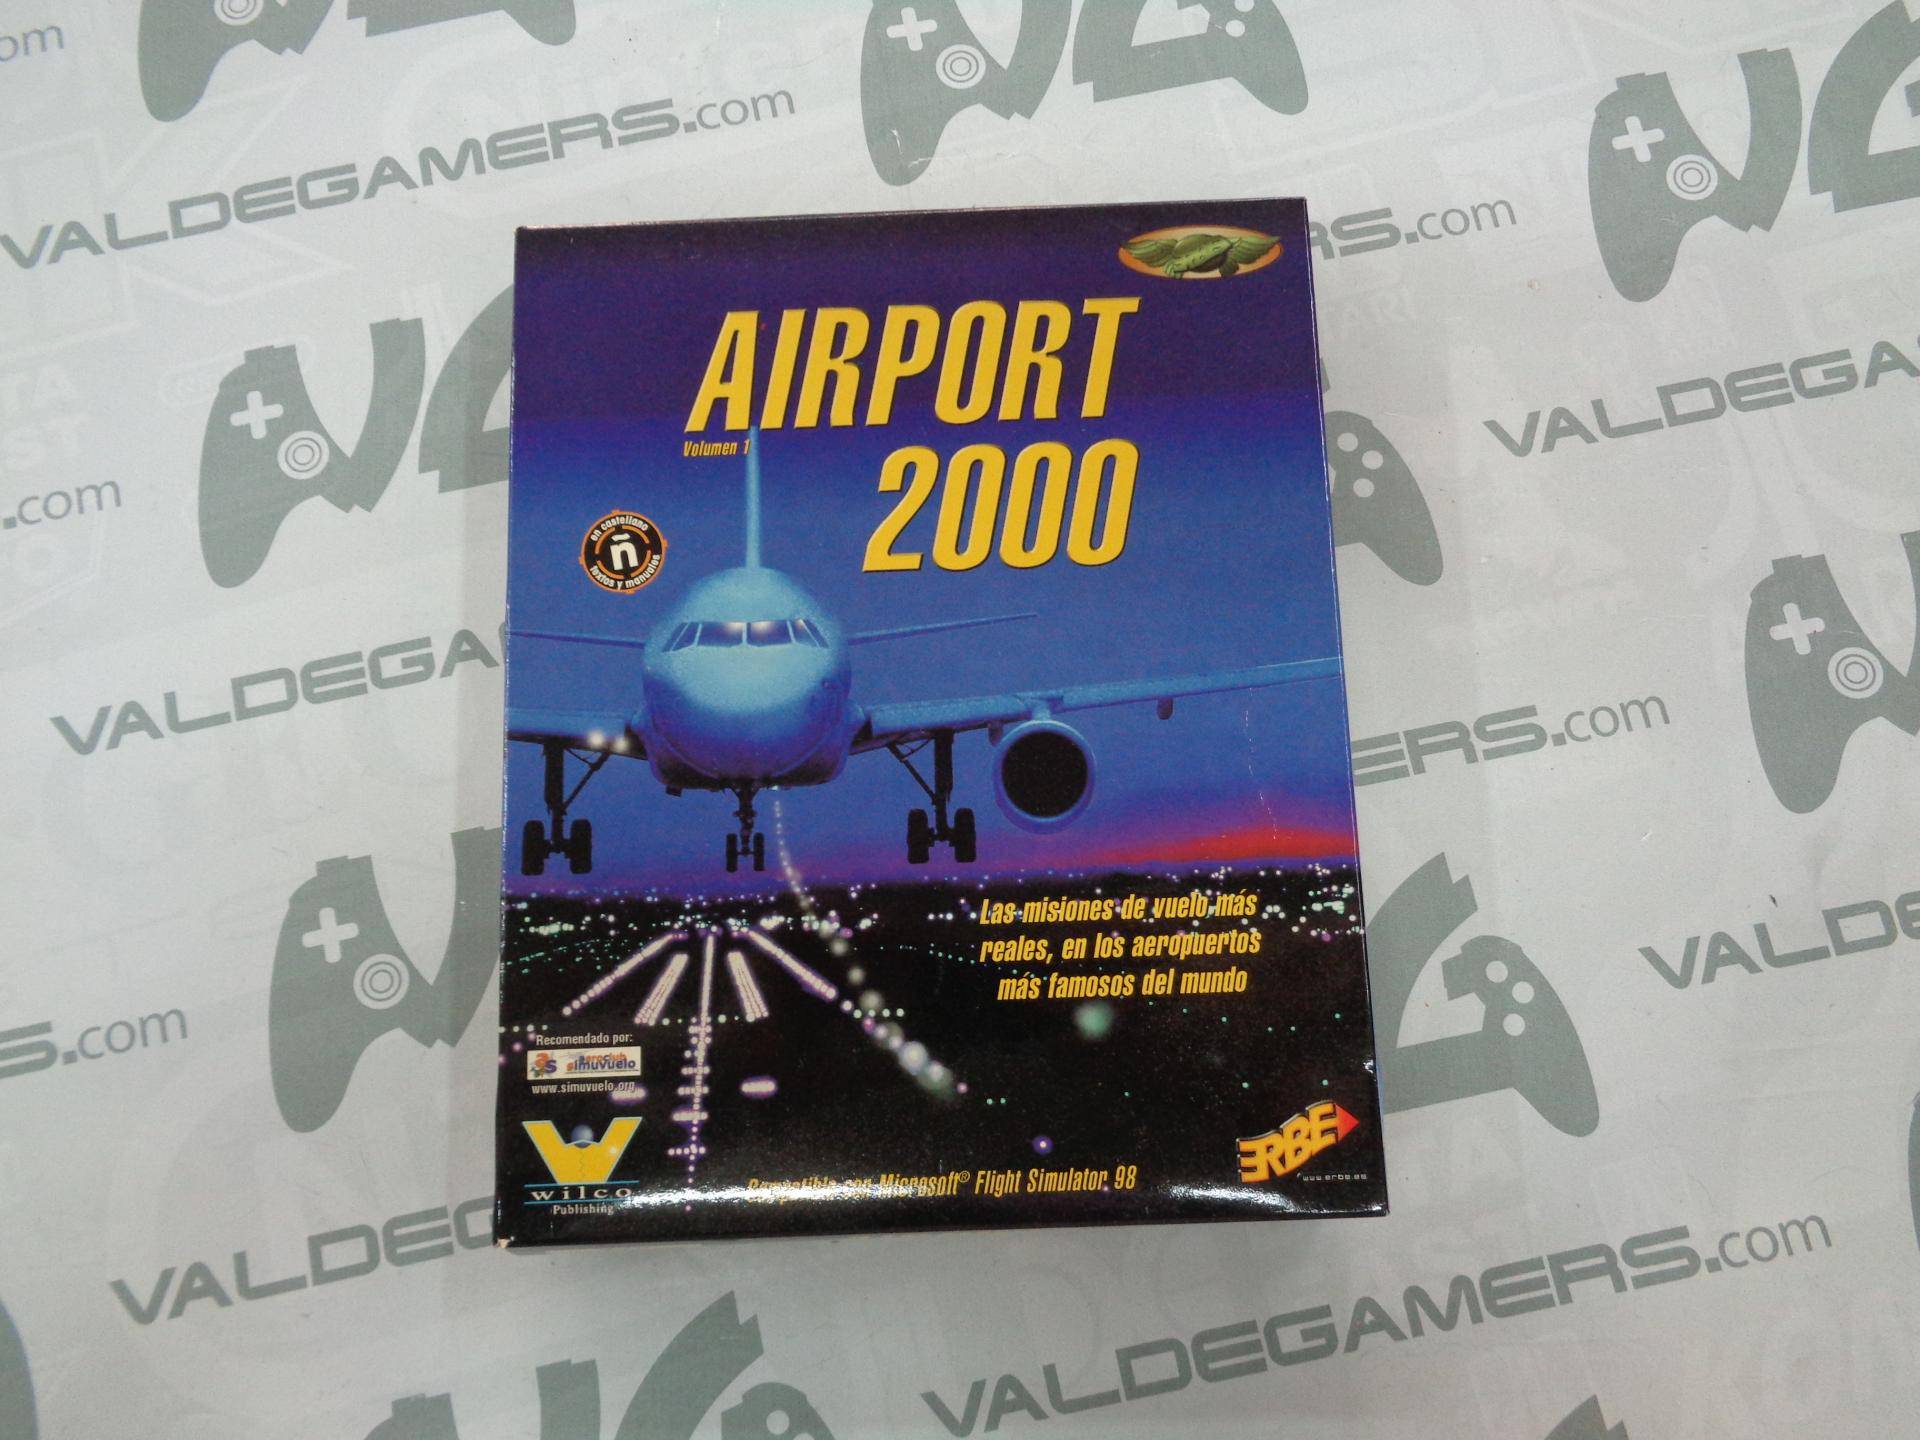  Airport 2000